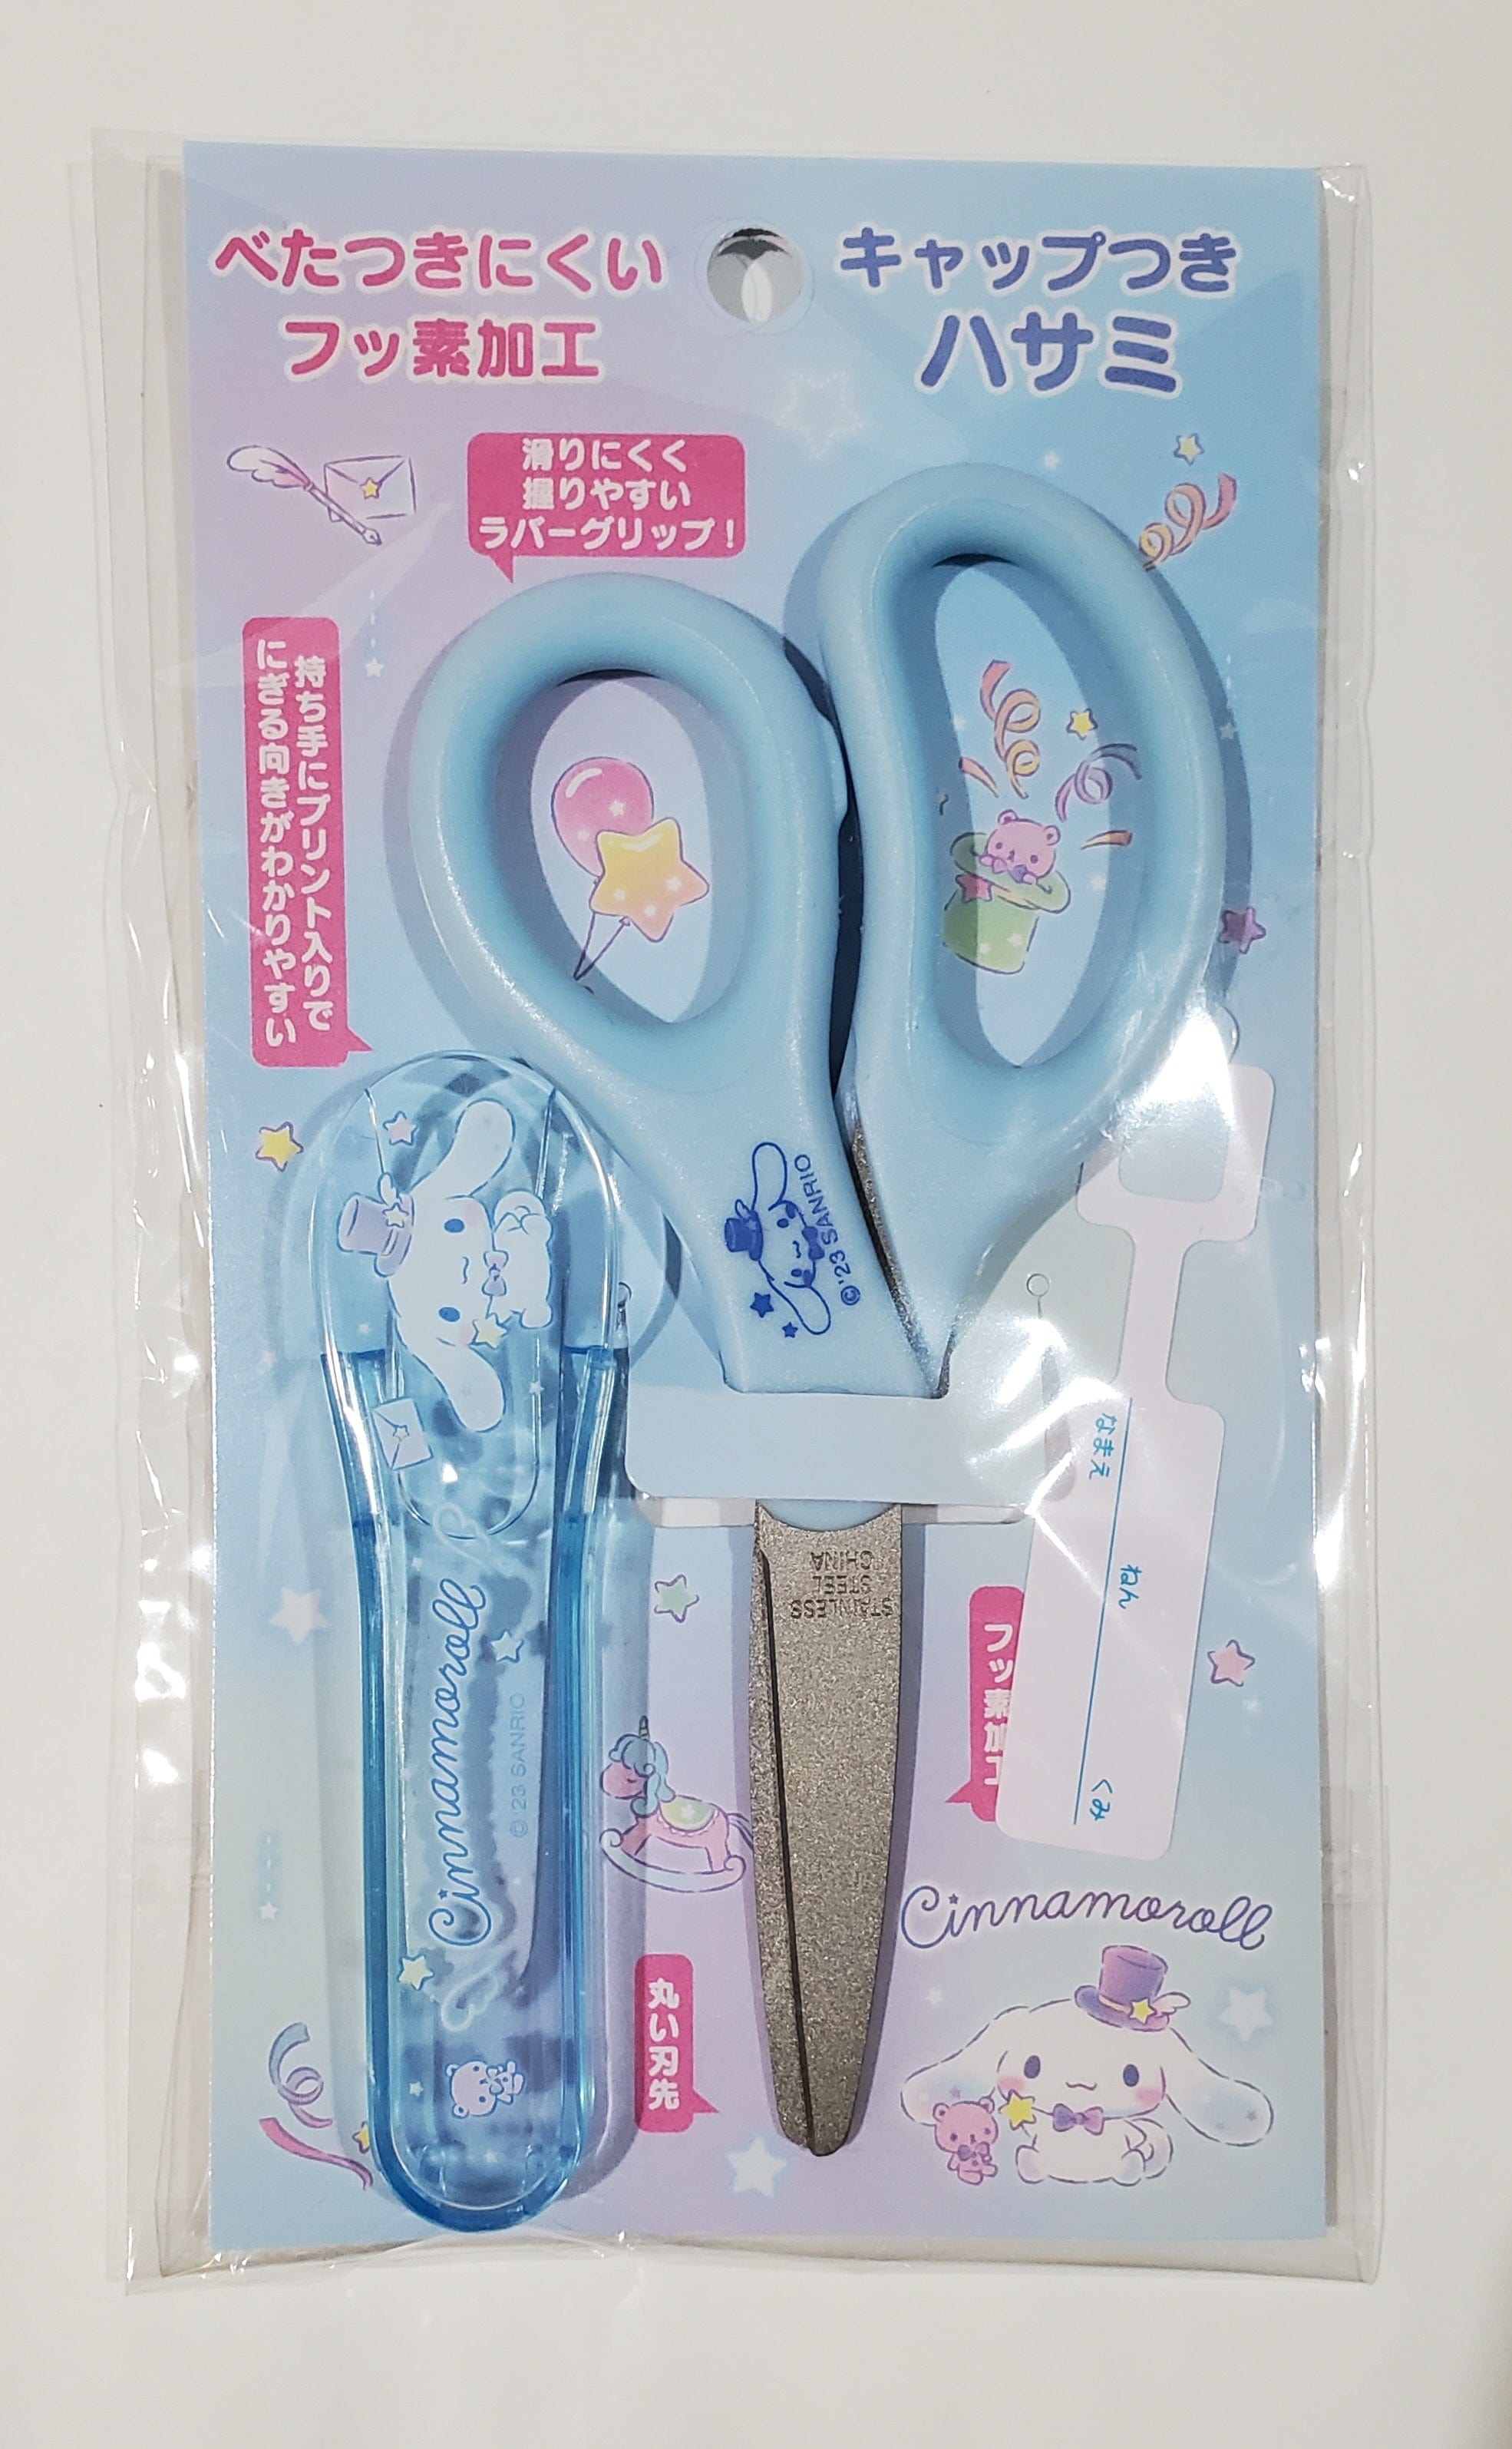 Enesco Sanrio Safety Scissors with Caps: Hello Kitty, My Melody, Cinnamoroll, Kuromi Kawaii Gifts